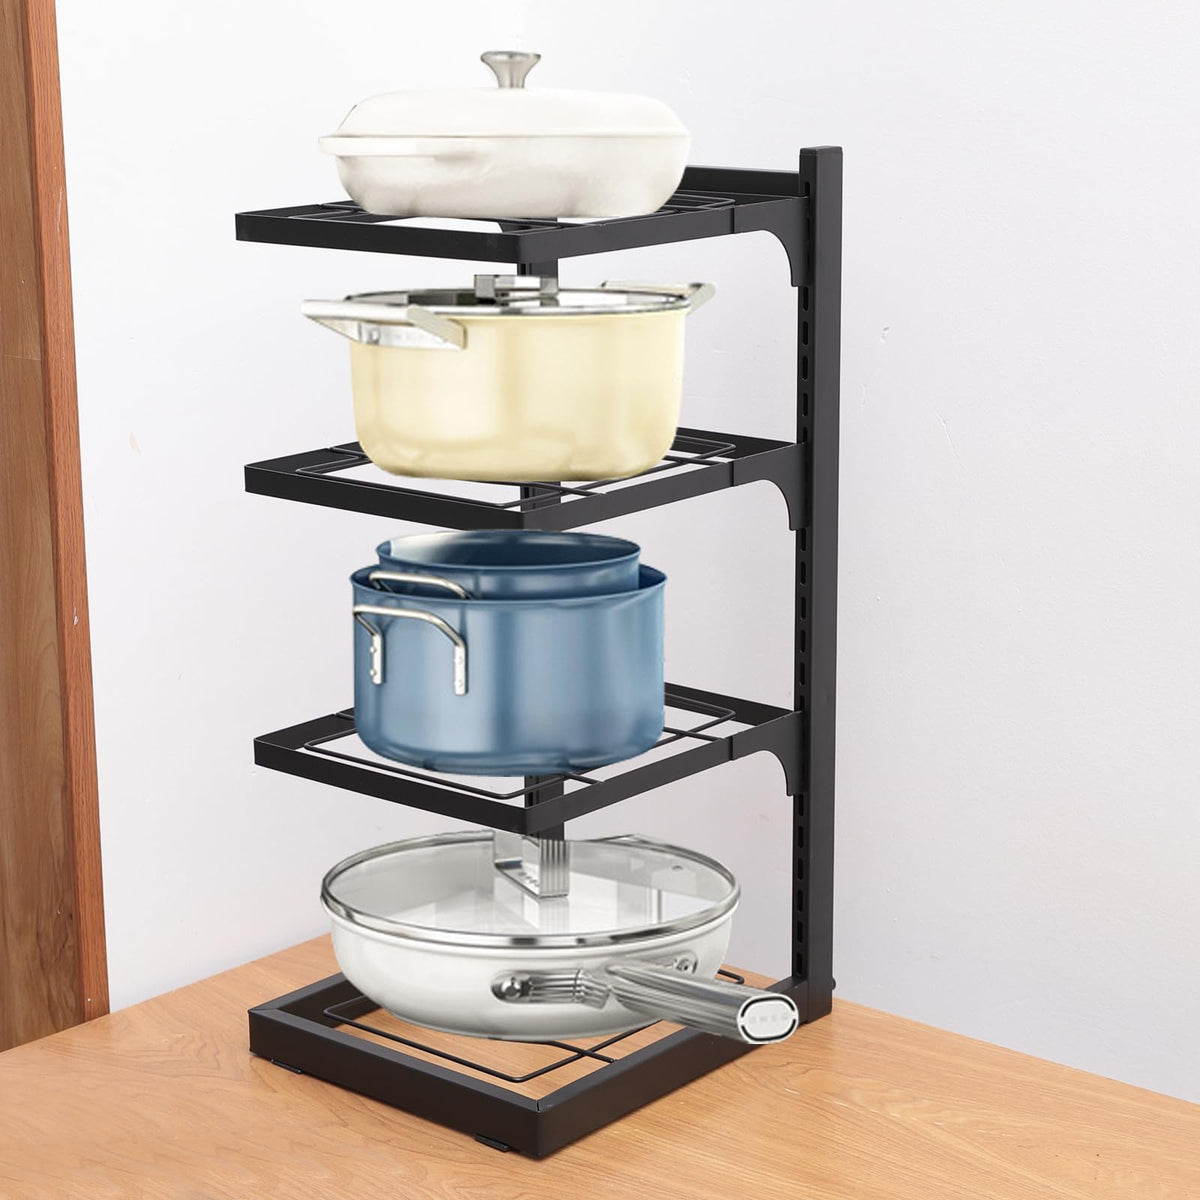 Kuber Industries 4-Layer Pots and Pans Organiser Rack|Kitchen Organization And Storage|Adjustable Pot Lid Holder Rack|Home Kitchen Accessories (Black)